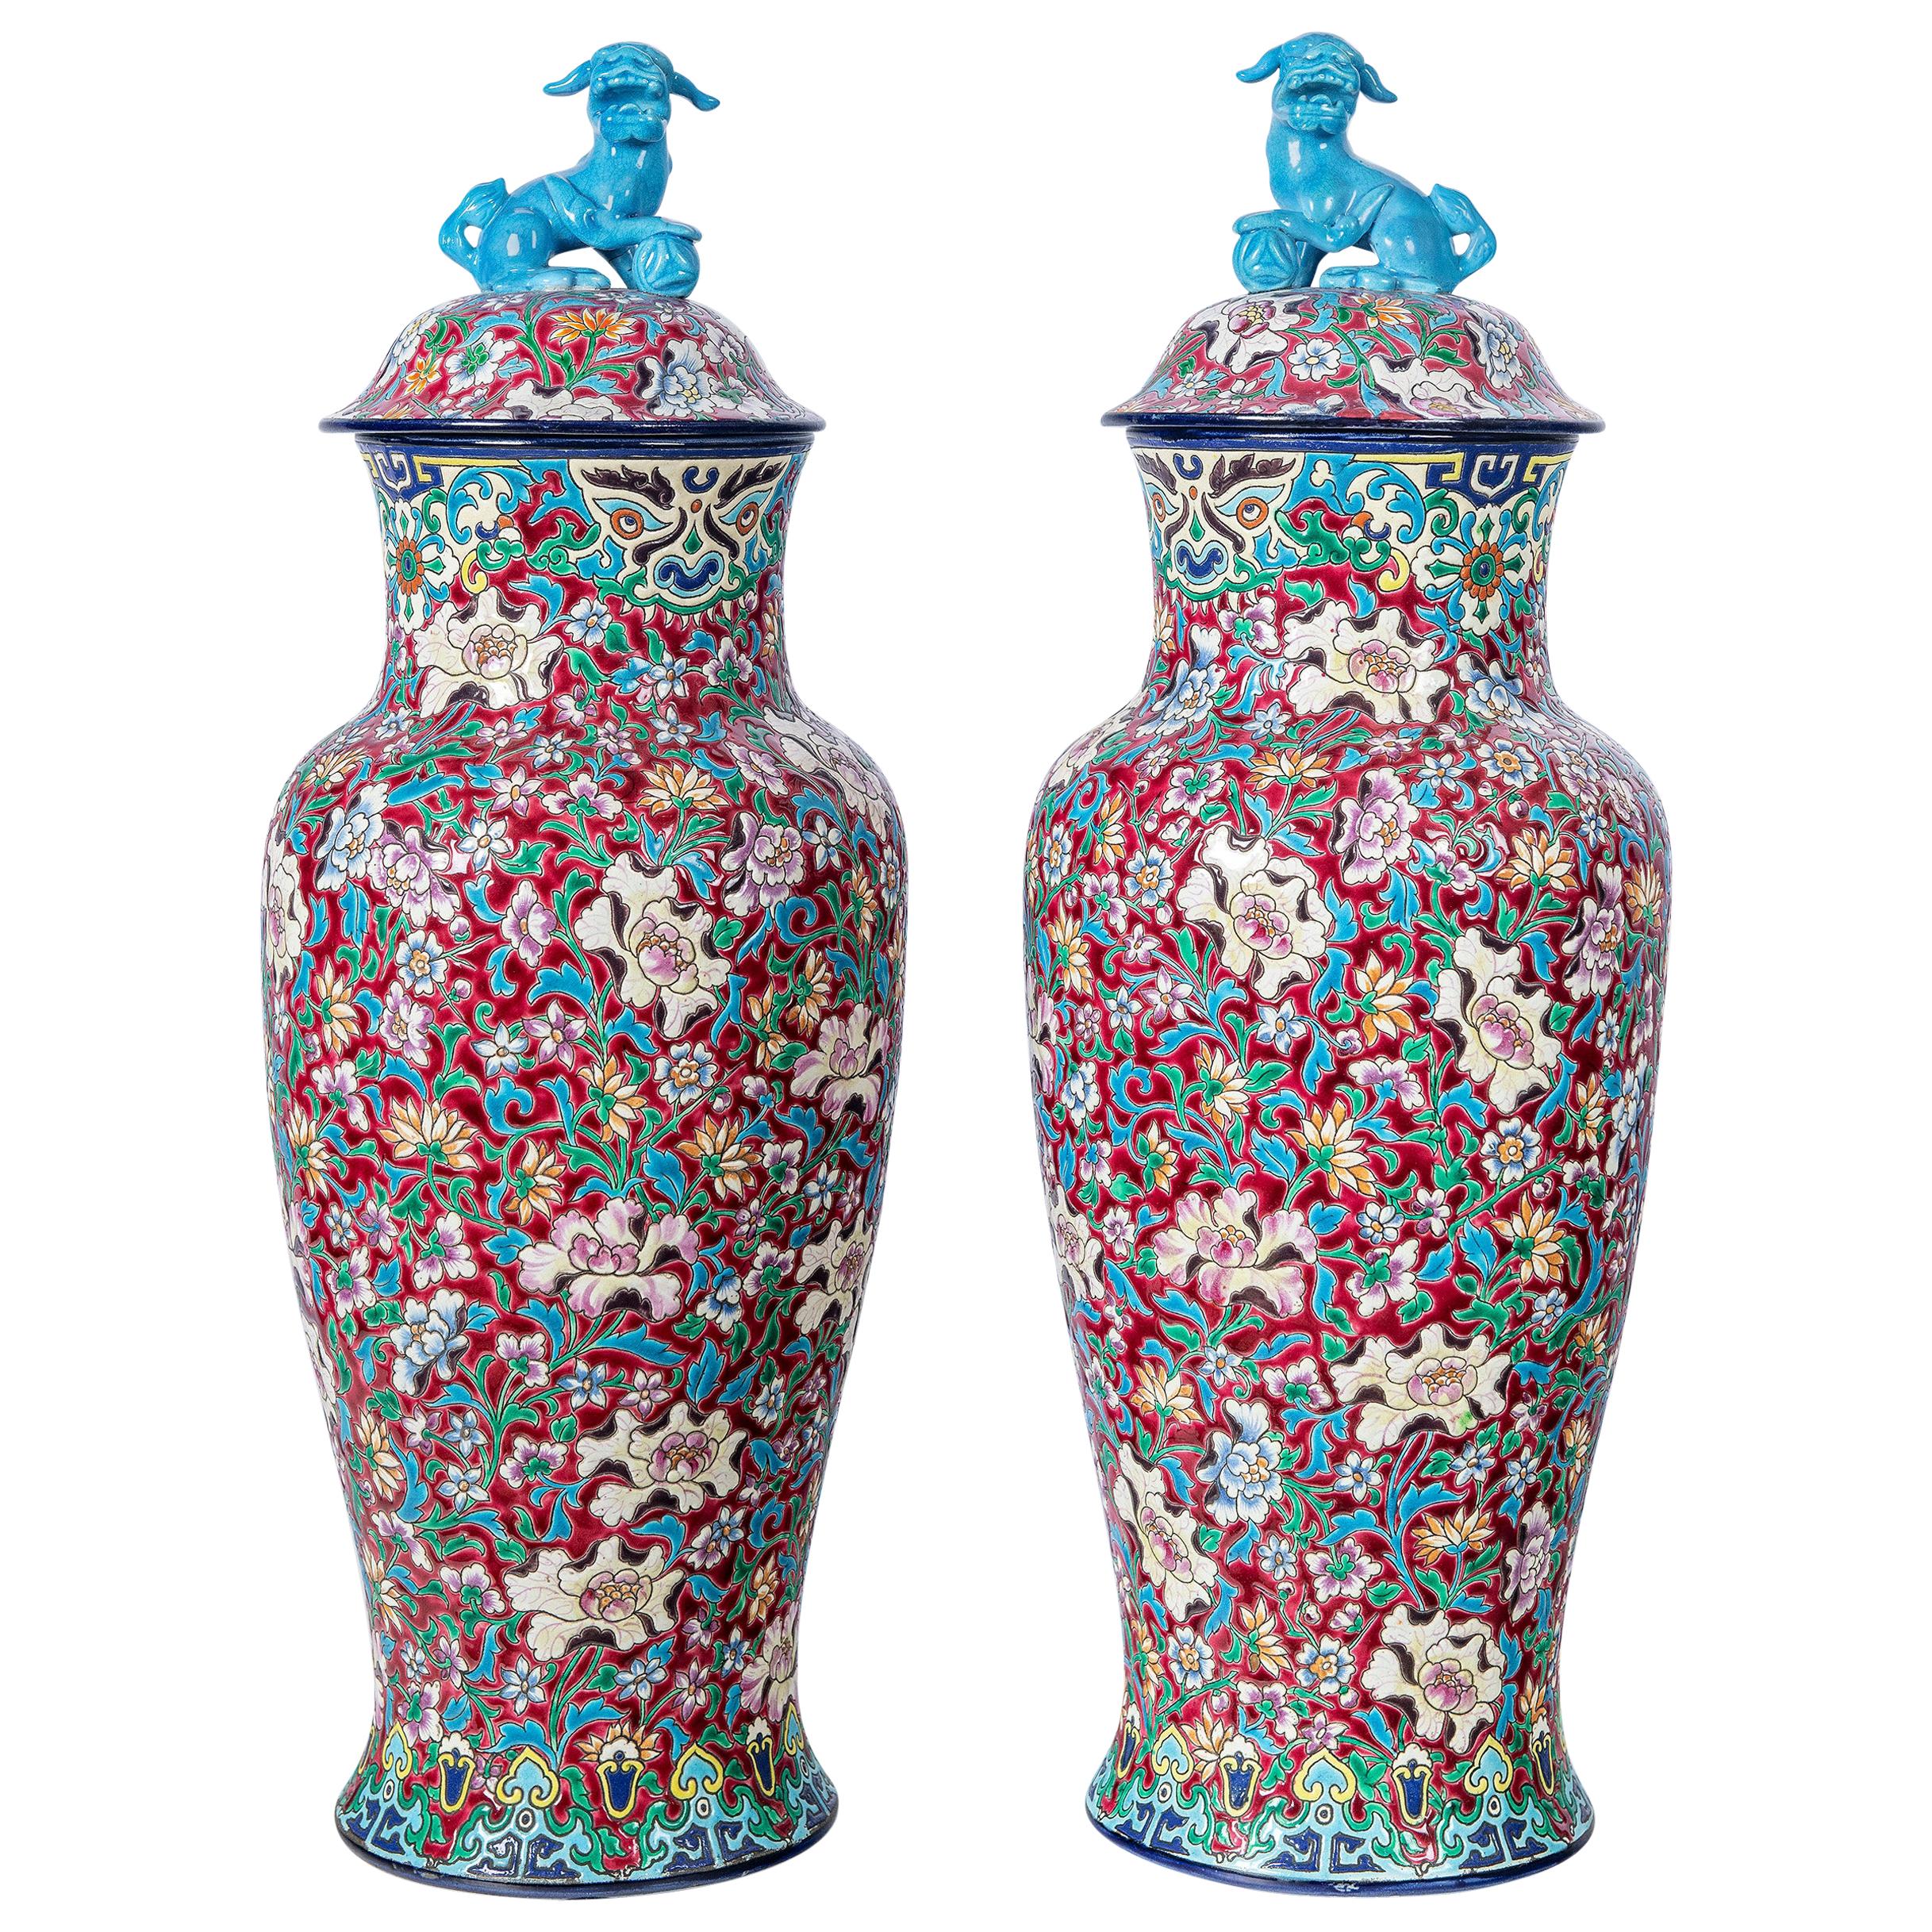 Pair of Enamel Ceramic Vases by Longwy, France, circa 1840